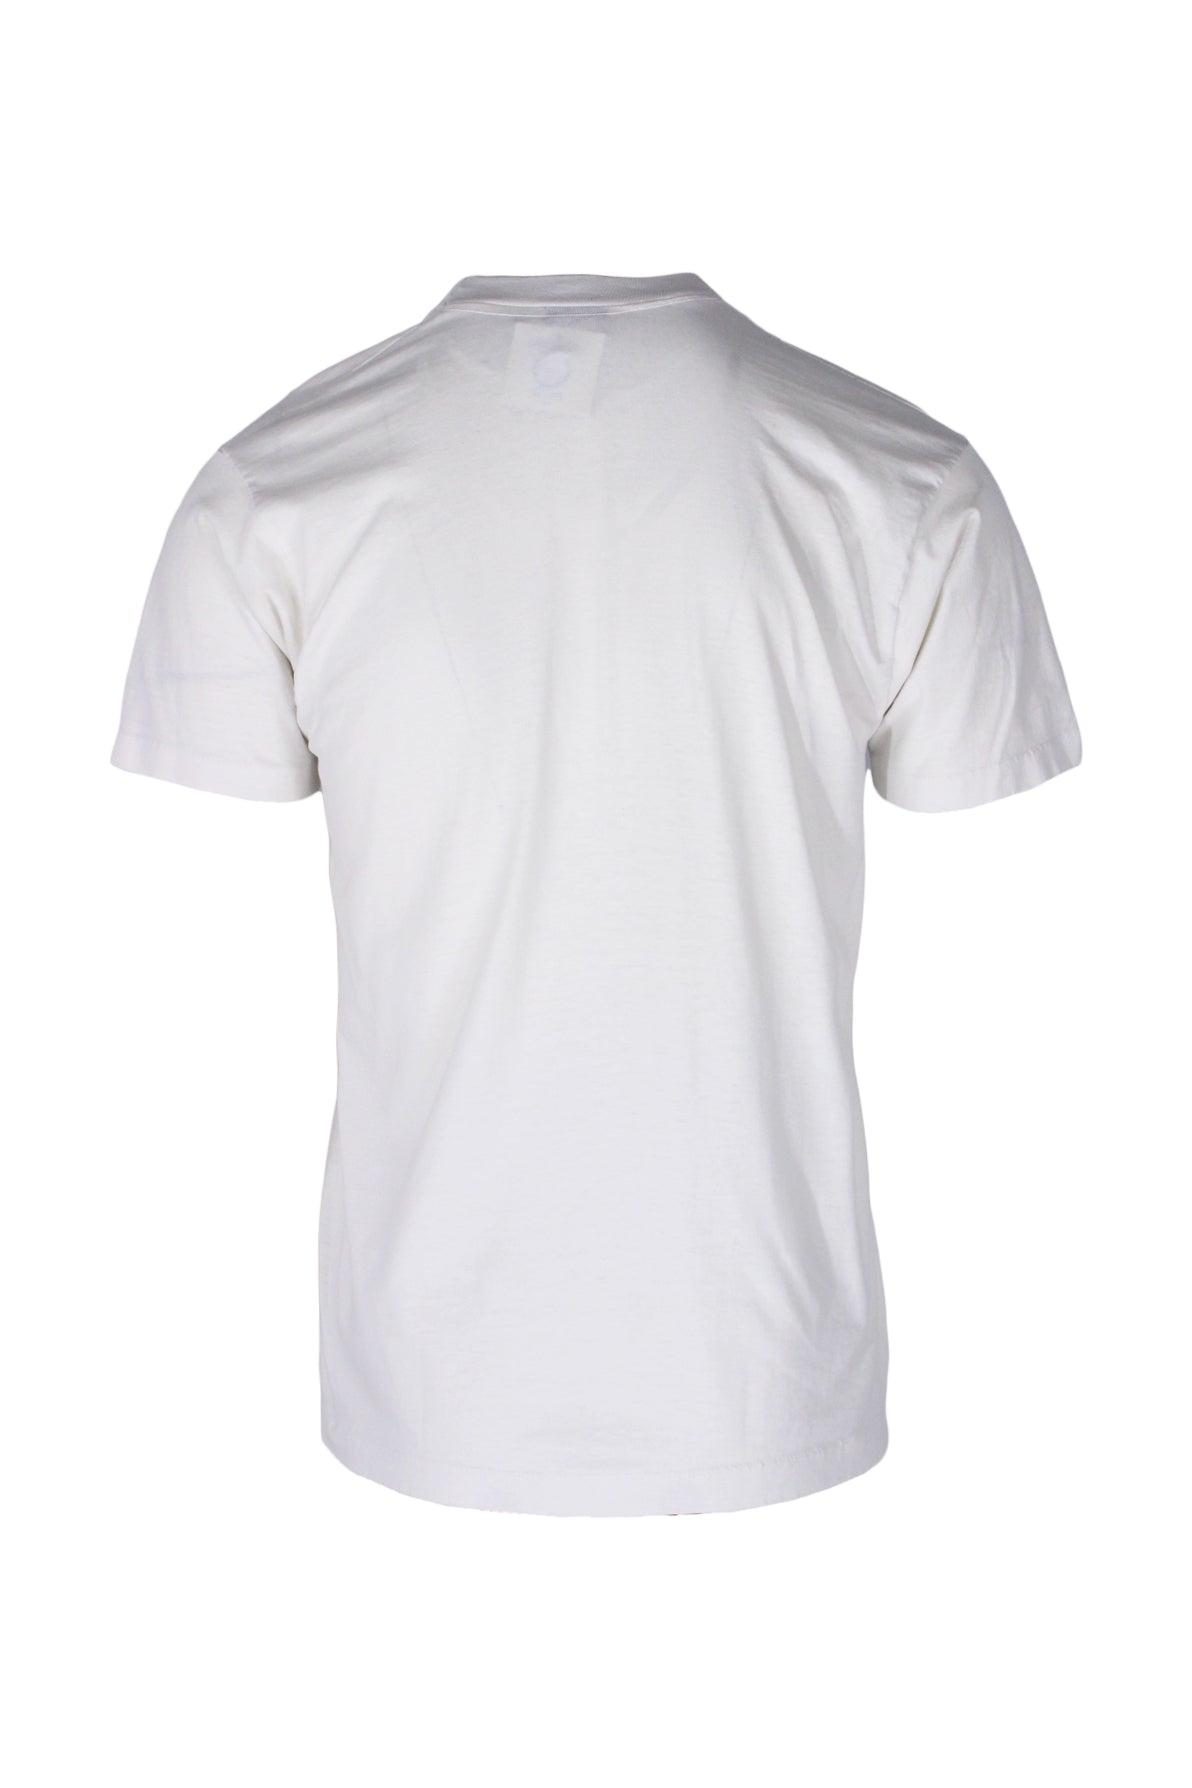 back angle of short sleeve t-shirt. 